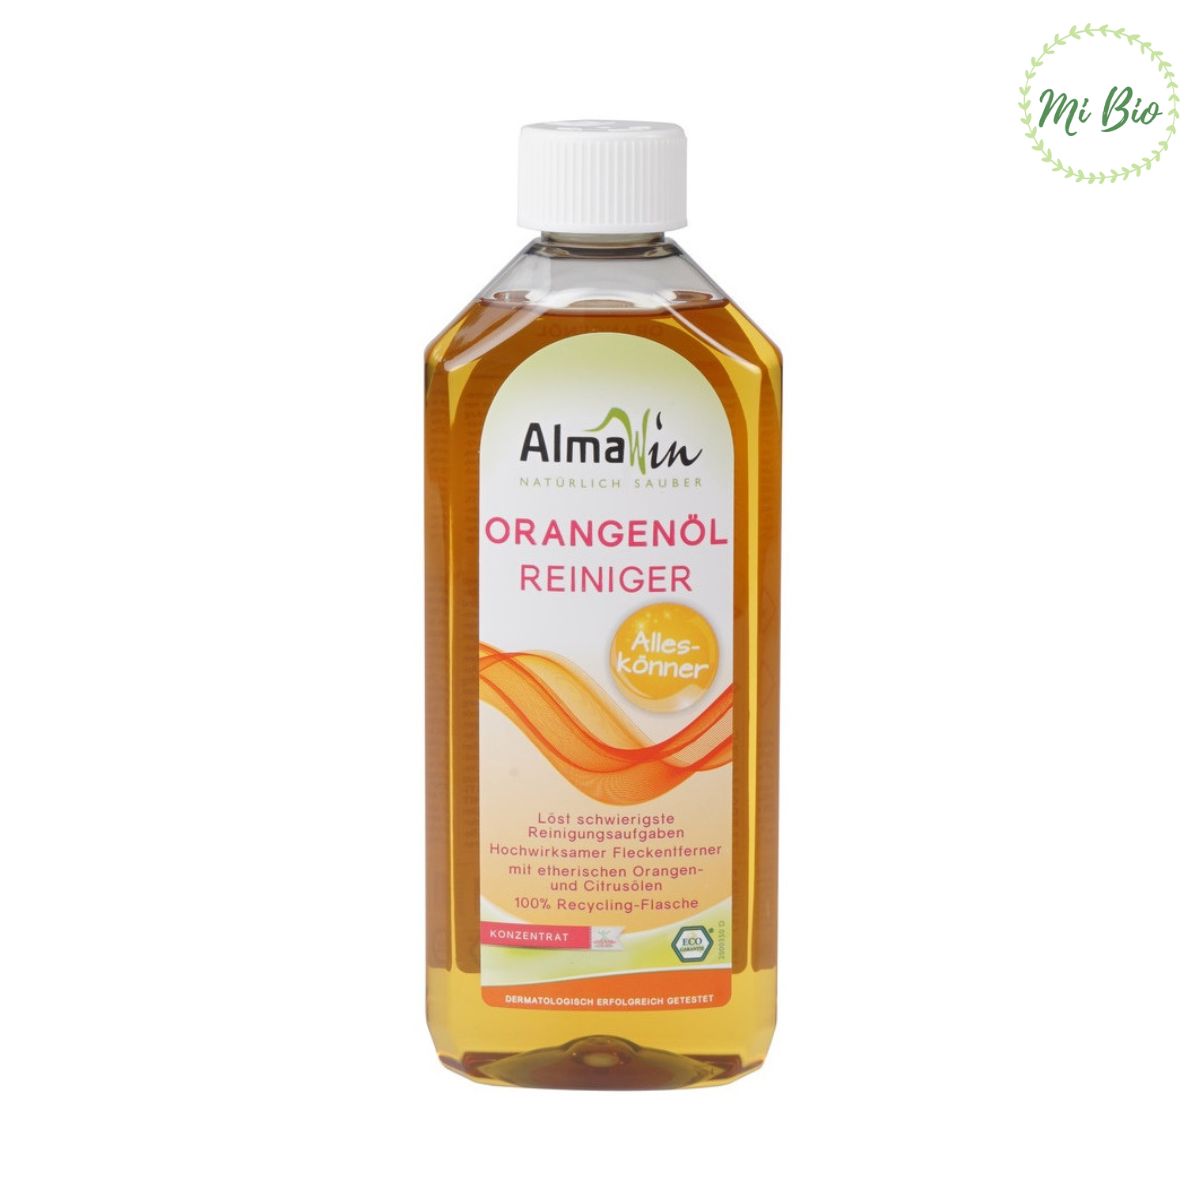 Orange essential oil organic toilet multi-purpose 500ml-almawin